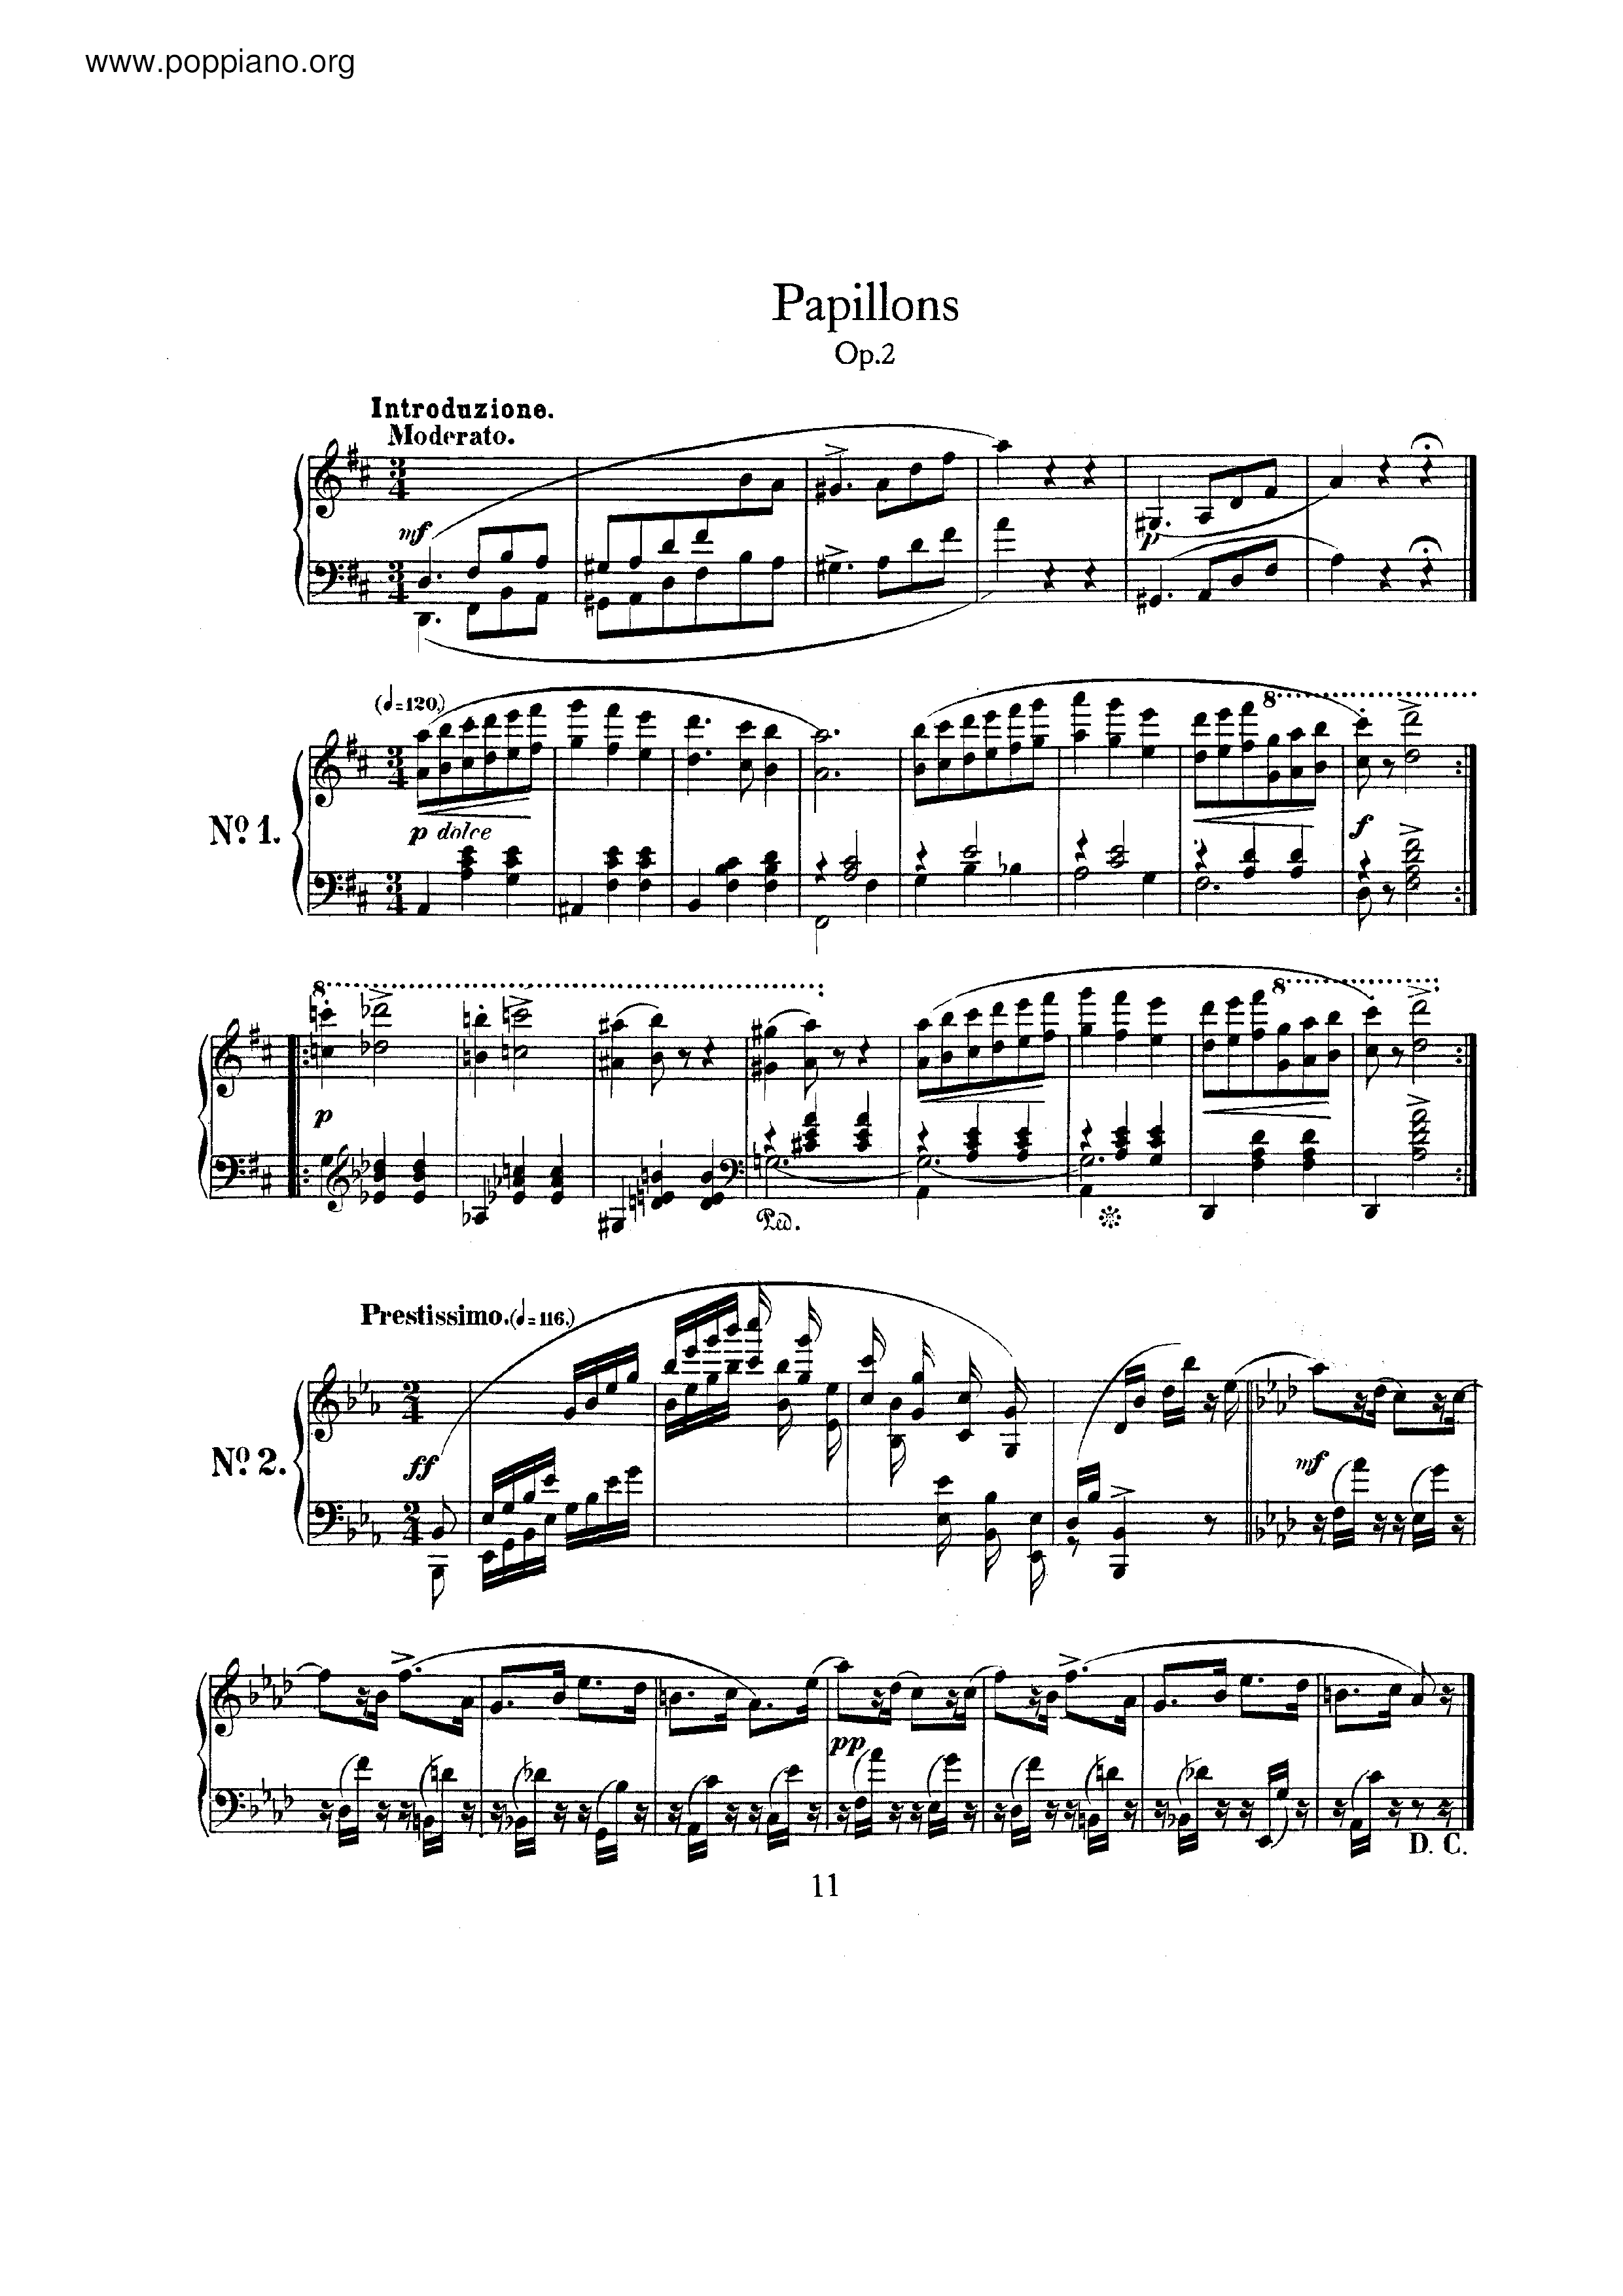 Papillons, Op.2ピアノ譜